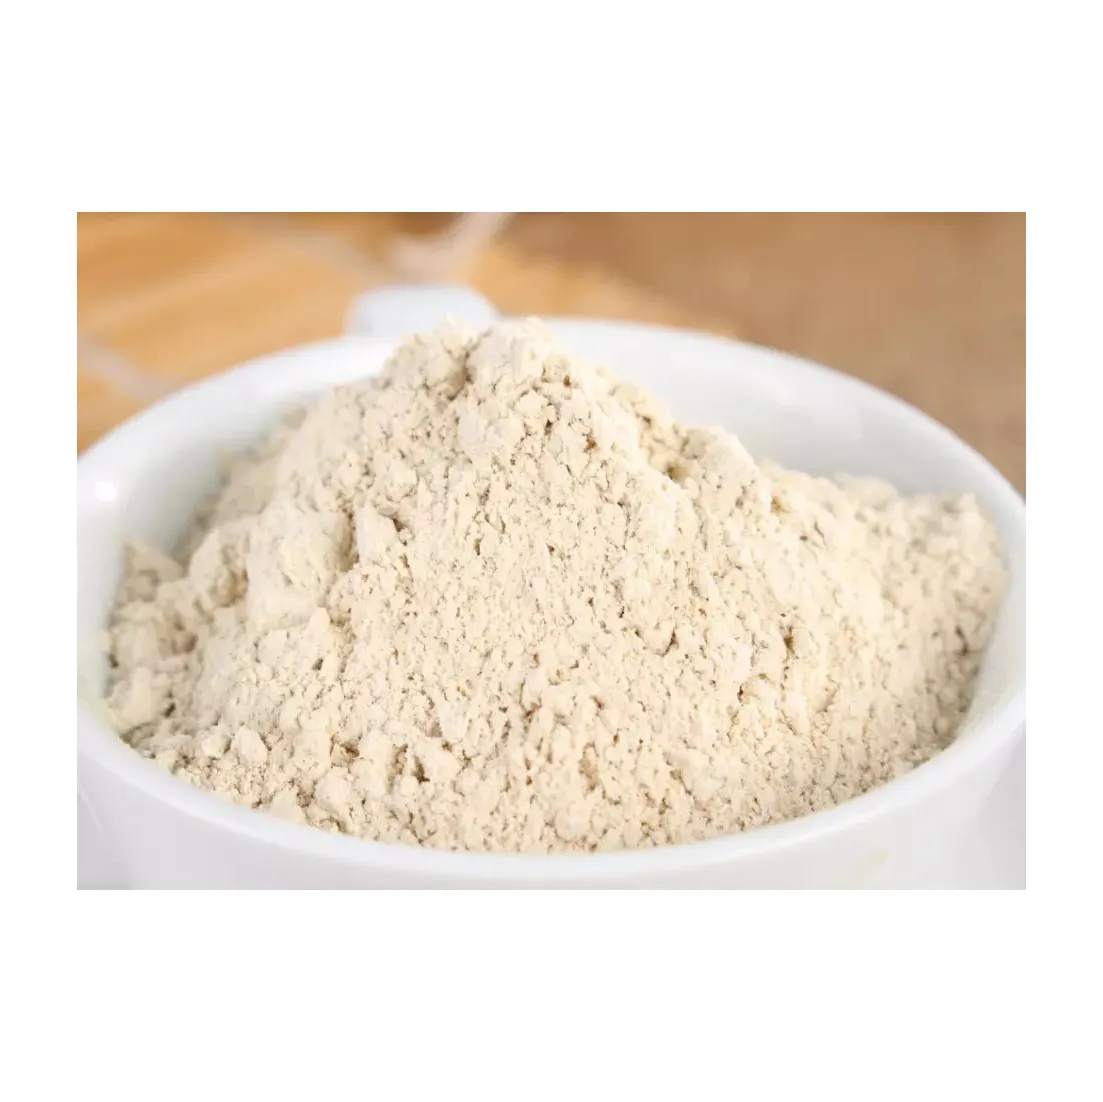 Bulk dehydrated concentrated organic granulated black garlic extract powder 1kg spray freeze dried prices allicin garlic powder